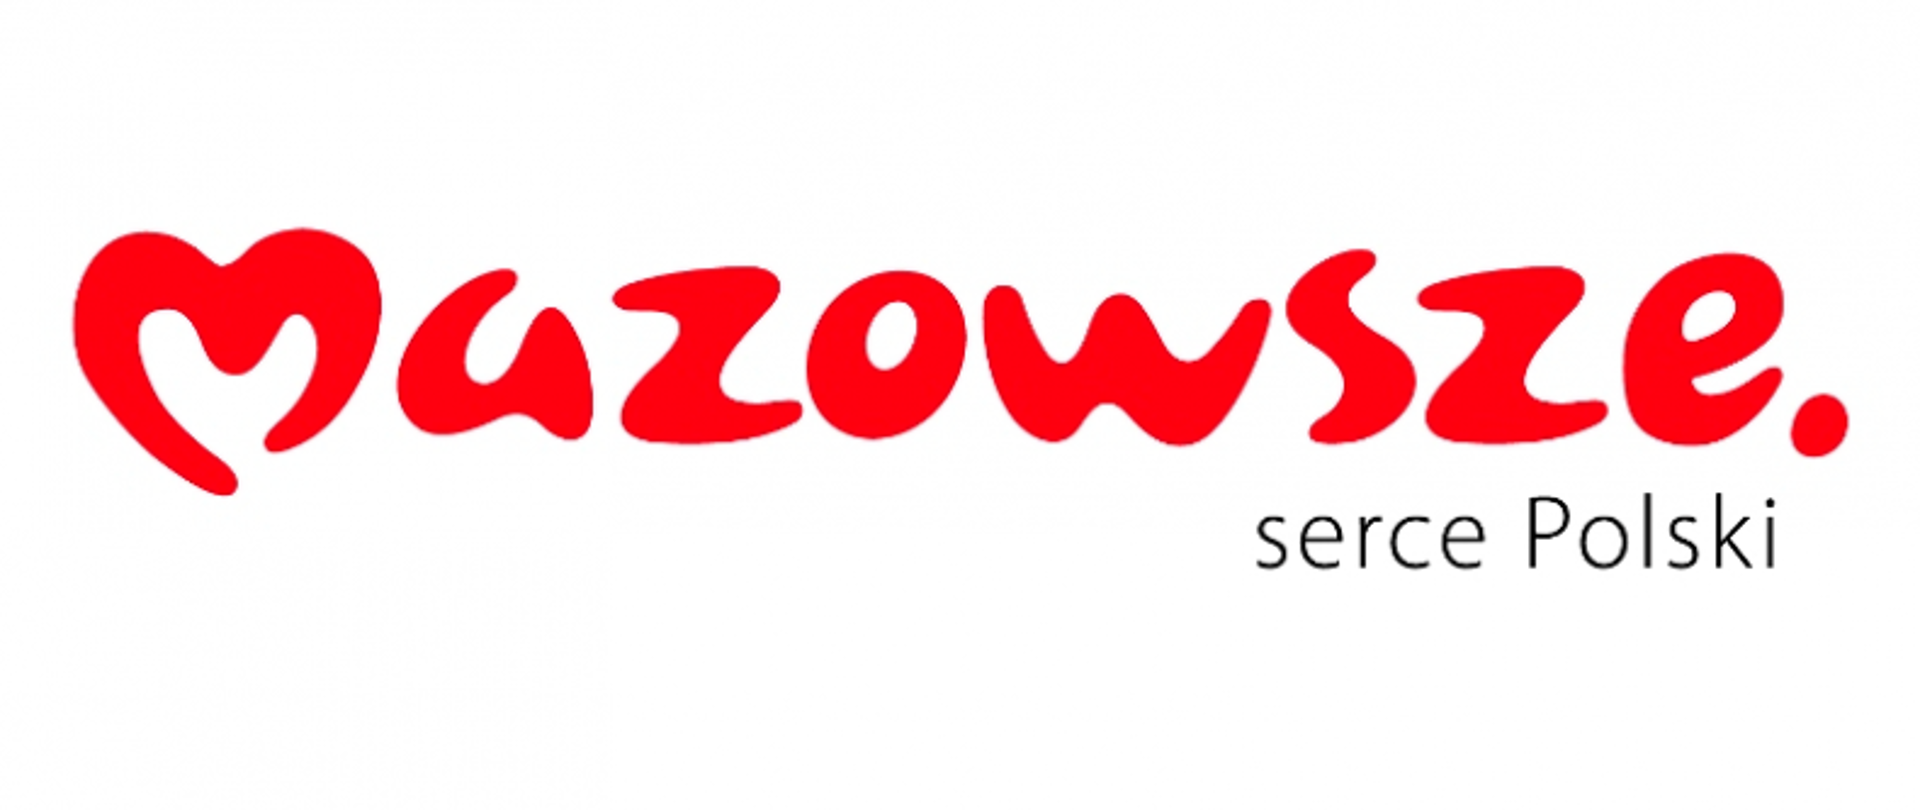 Mazowsze serce polski-logo